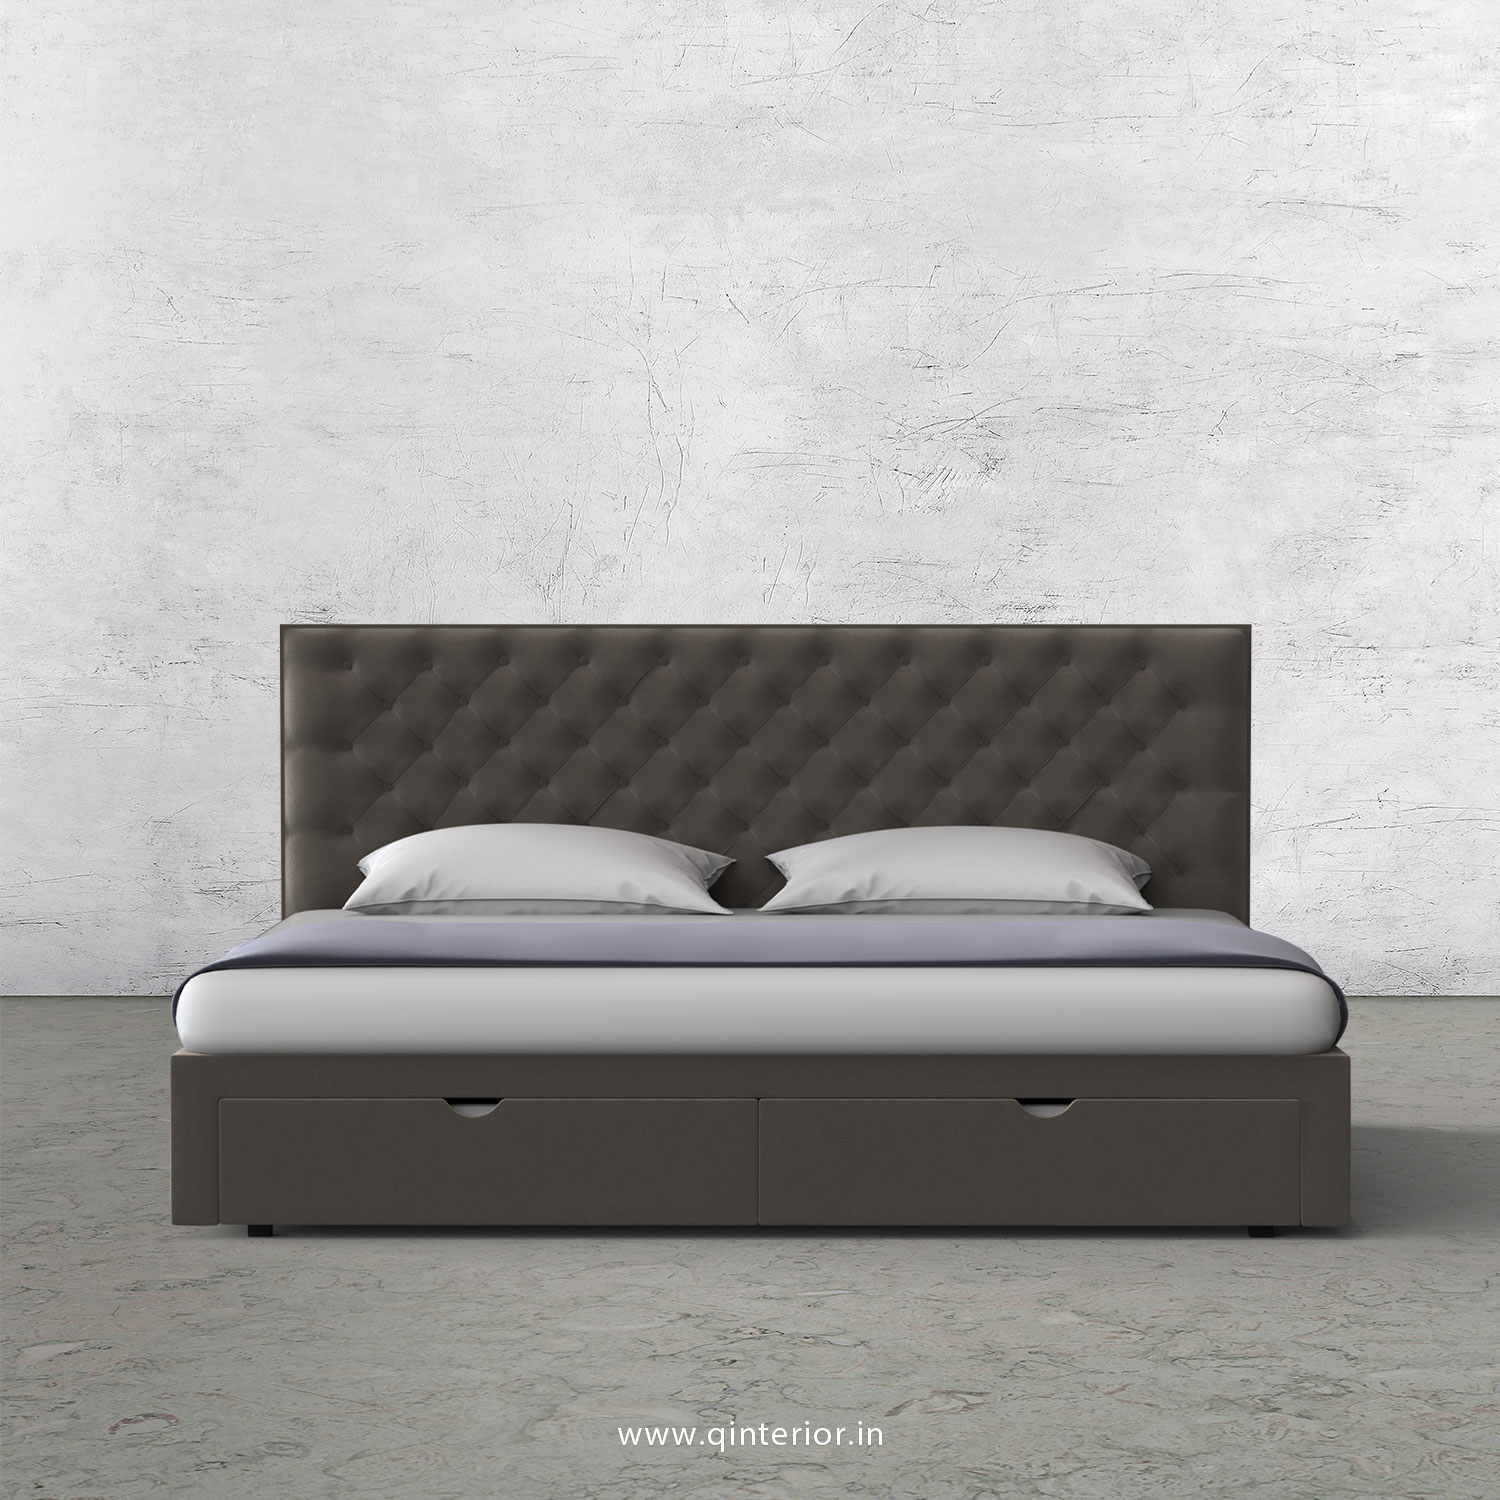 Orion King Size Storage Bed in Velvet Fabric - KBD001 VL12